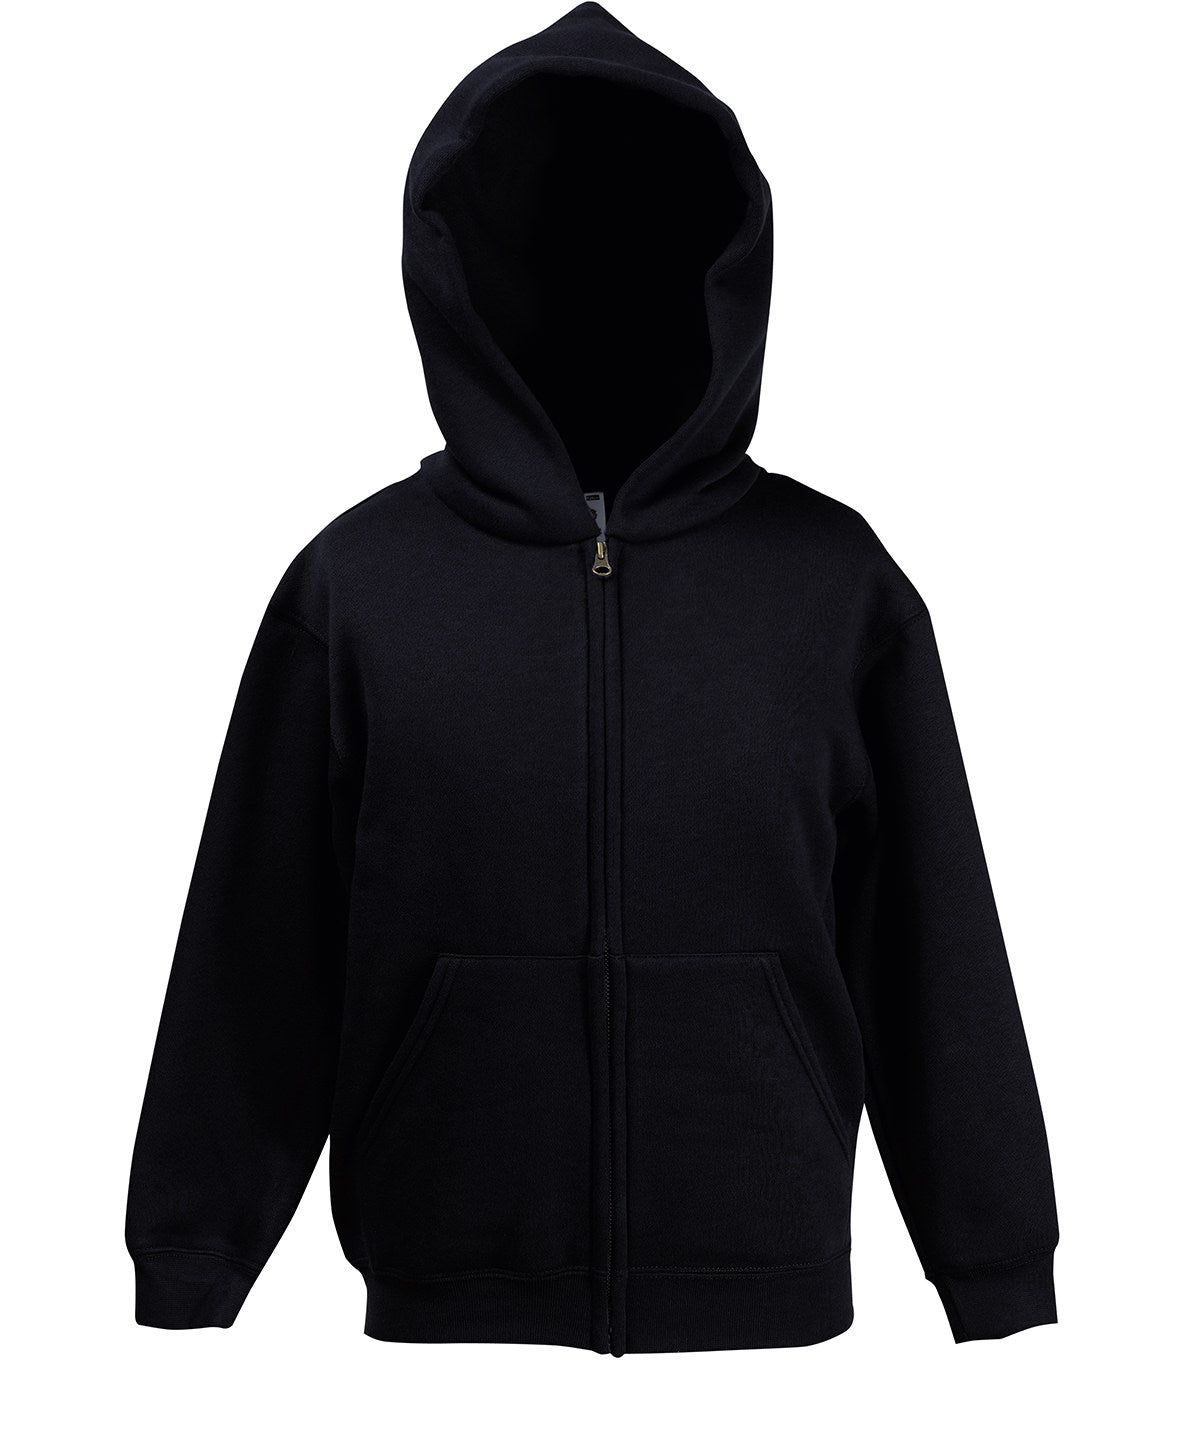 Kids premium hooded sweatshirt jacket | Black